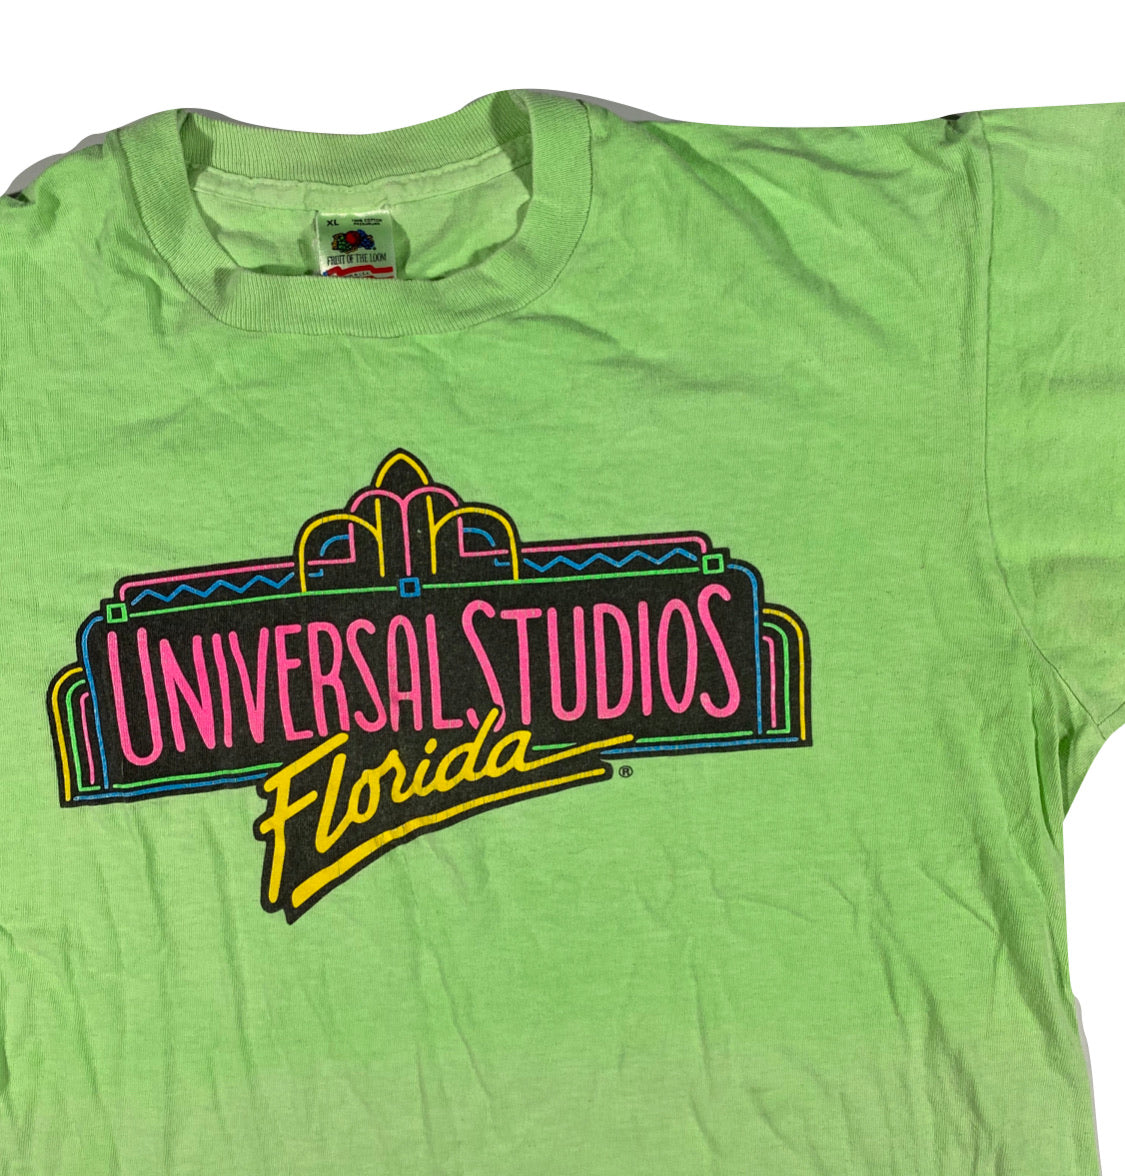 90s Universal studios tee. XL